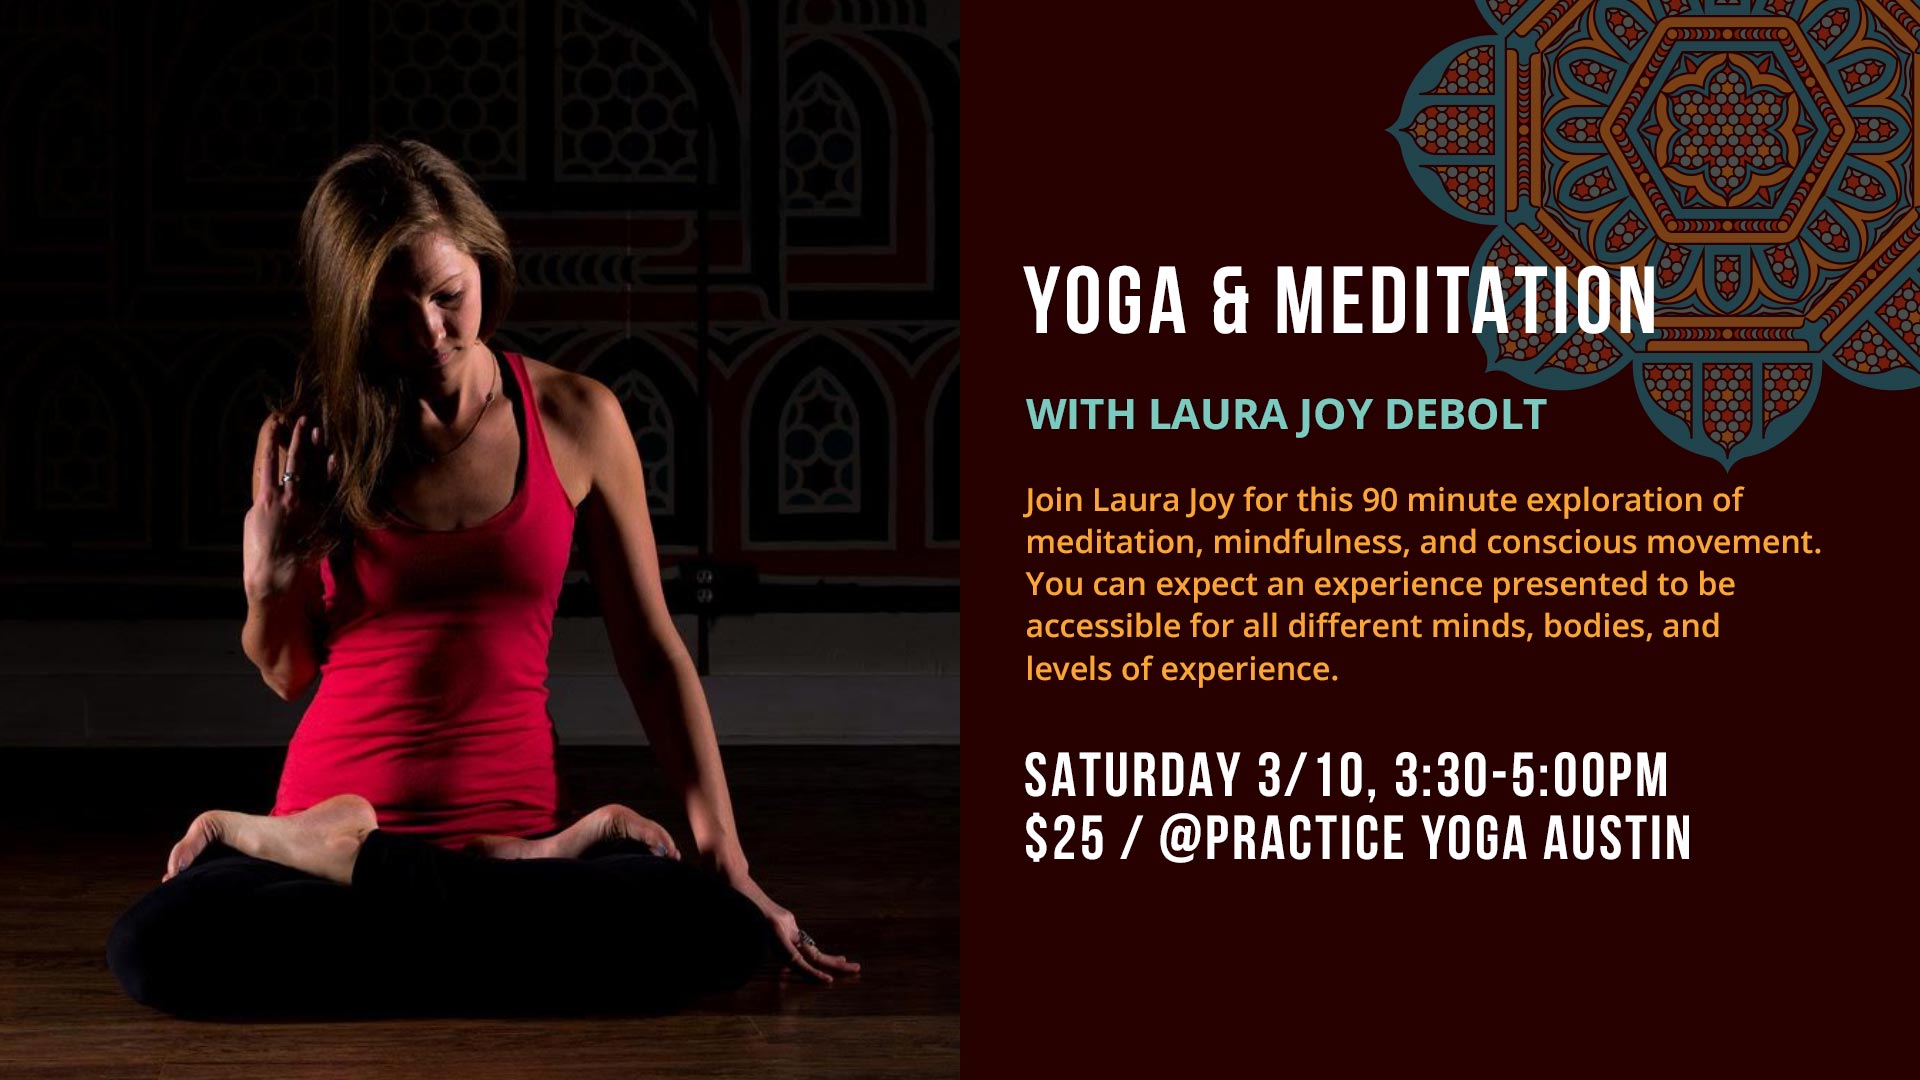 Yoga and Meditation with Laura Joy DeBolt at Practice Yoga Austin